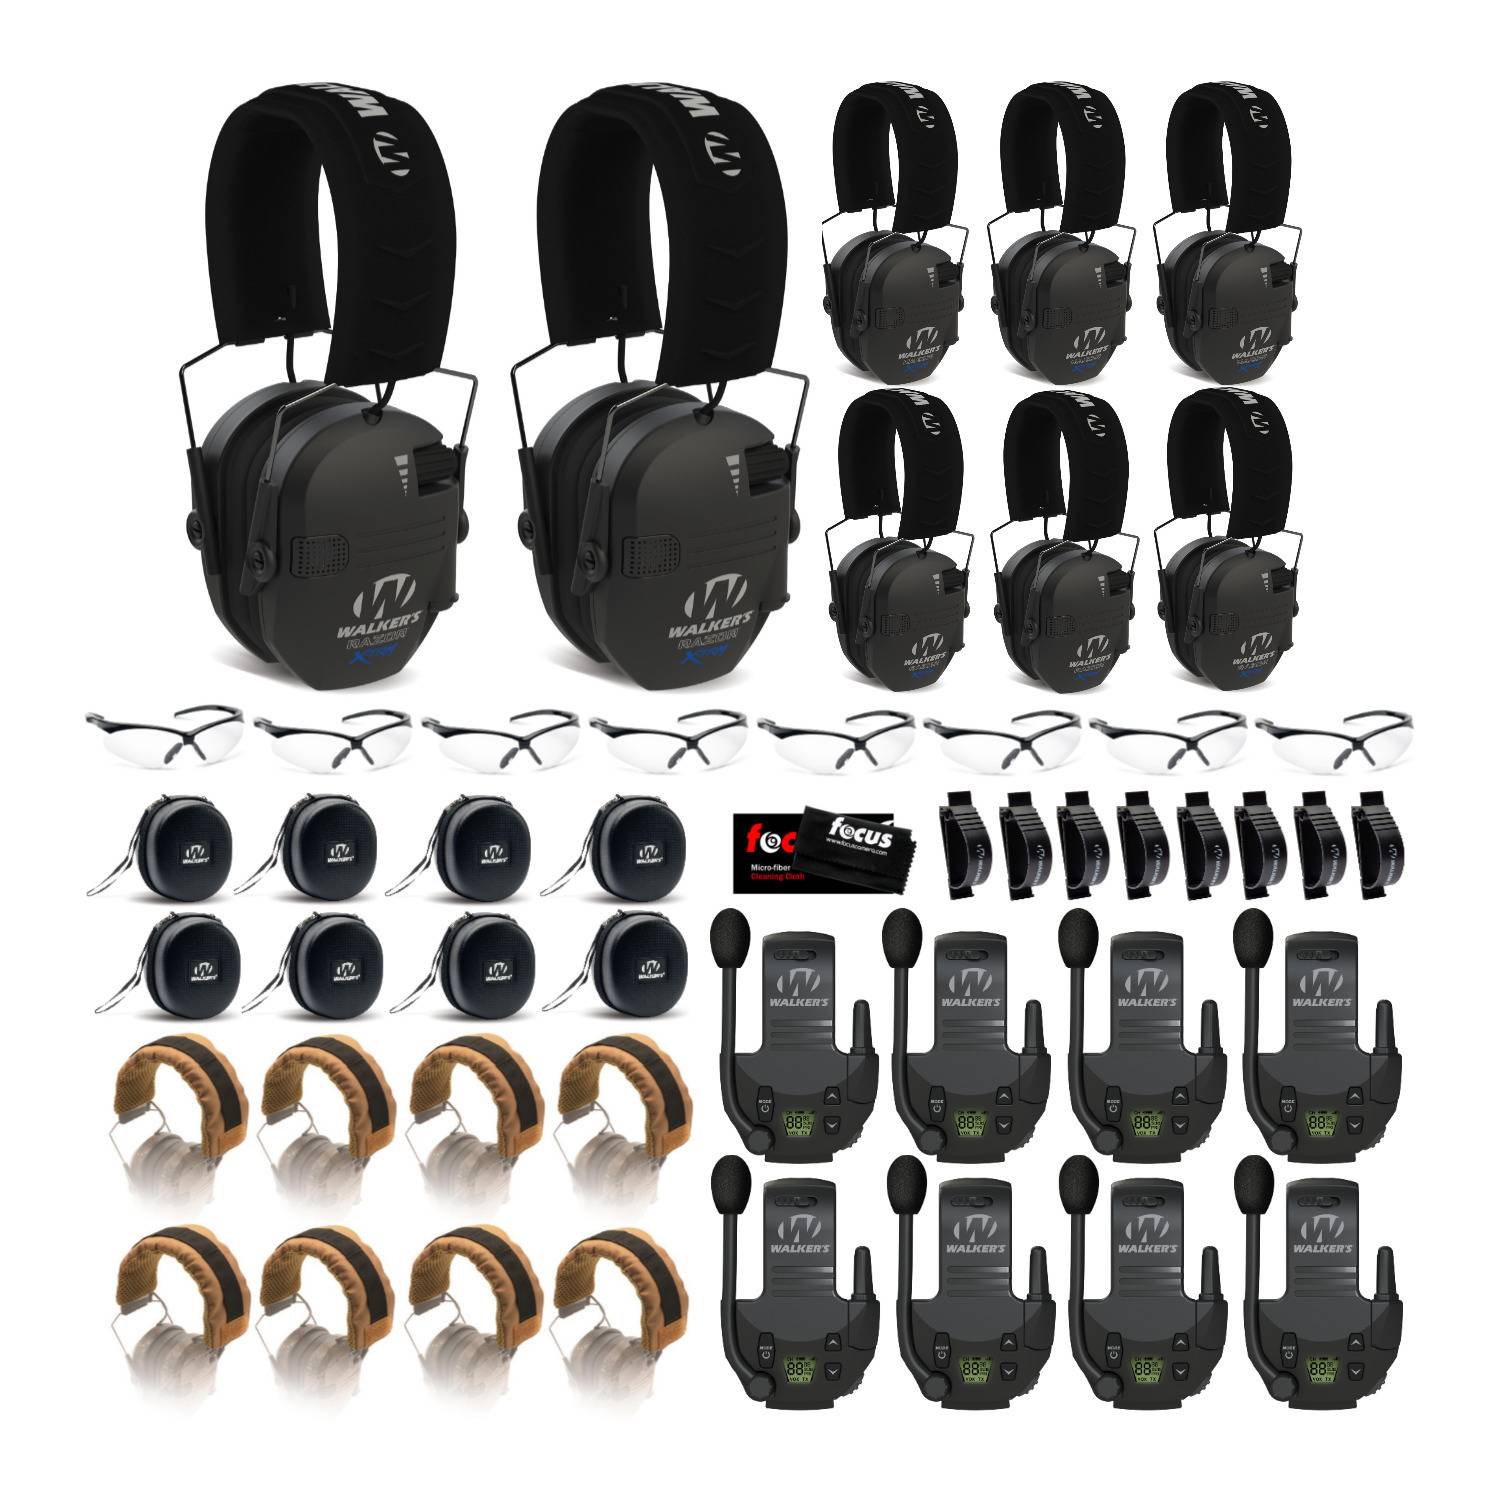 Walker's Razor X-TRM Digital Ear Muffs (Black, 8-Pack) with Walkie Talkie Attachments, Cases, and Headband Wraps Bundle